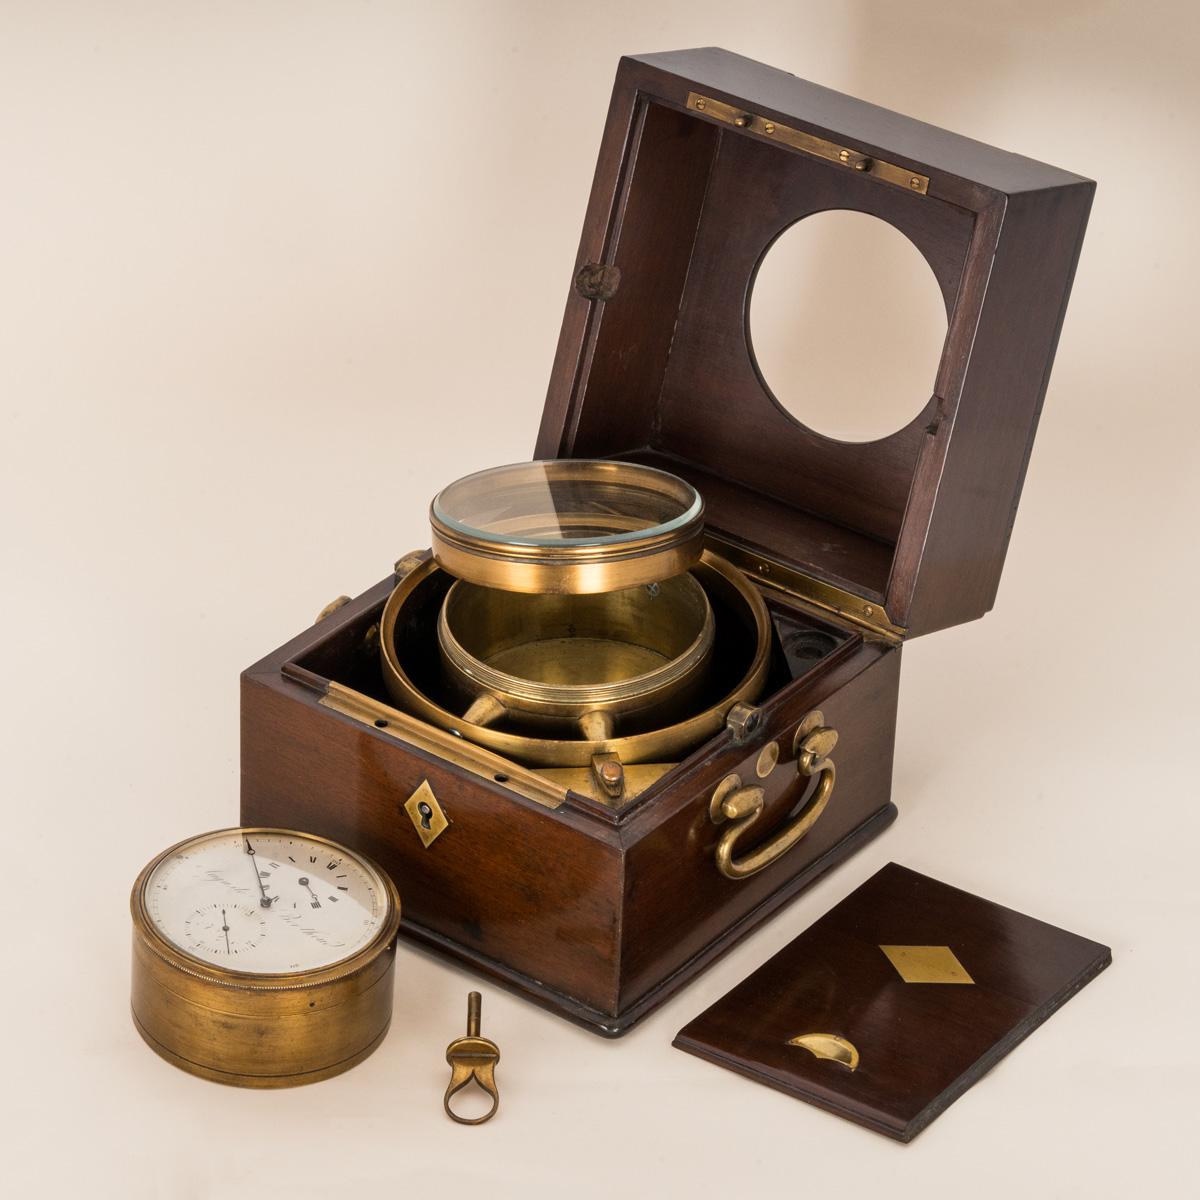 Auguste Berthoud. A Rare Antique Experimental Marine Chronometer C1840 For Sale 4